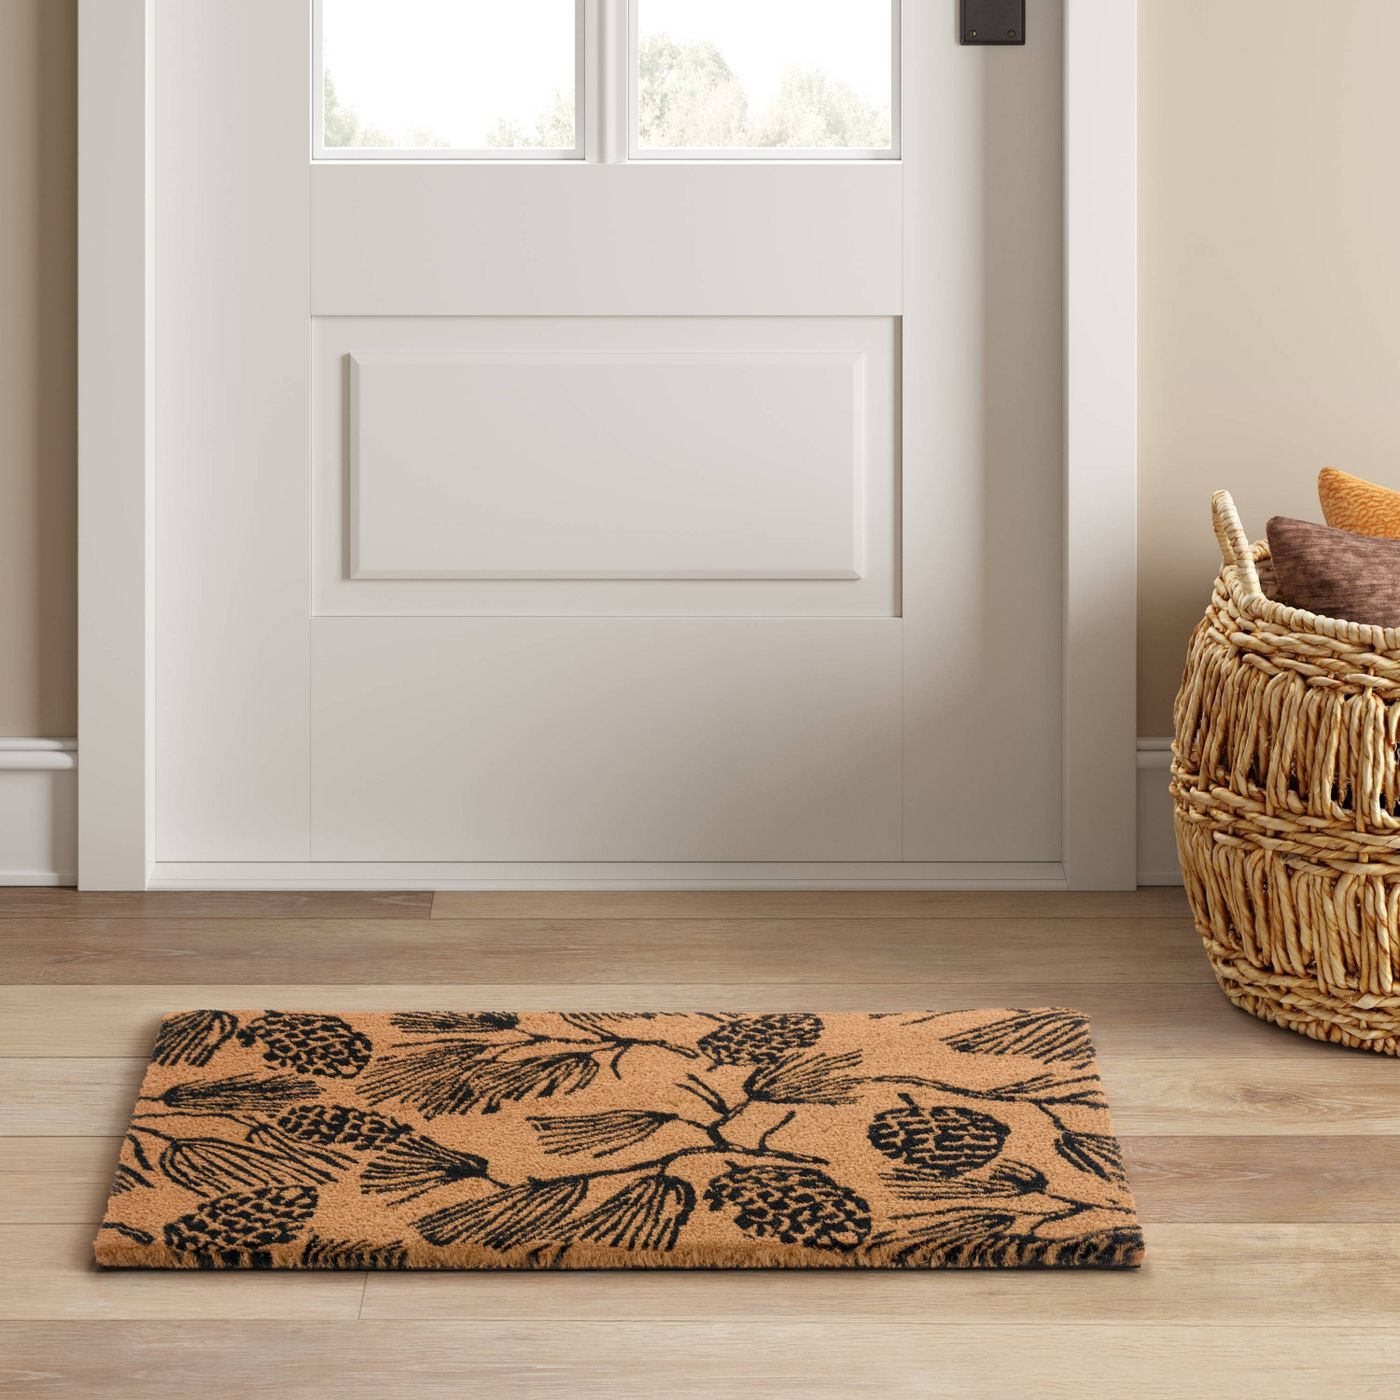 Cute Doormat Gather Doormat Doormat Porch Decor Farmhouse Decor Welcome Mat Decor Door Mat Home Decor